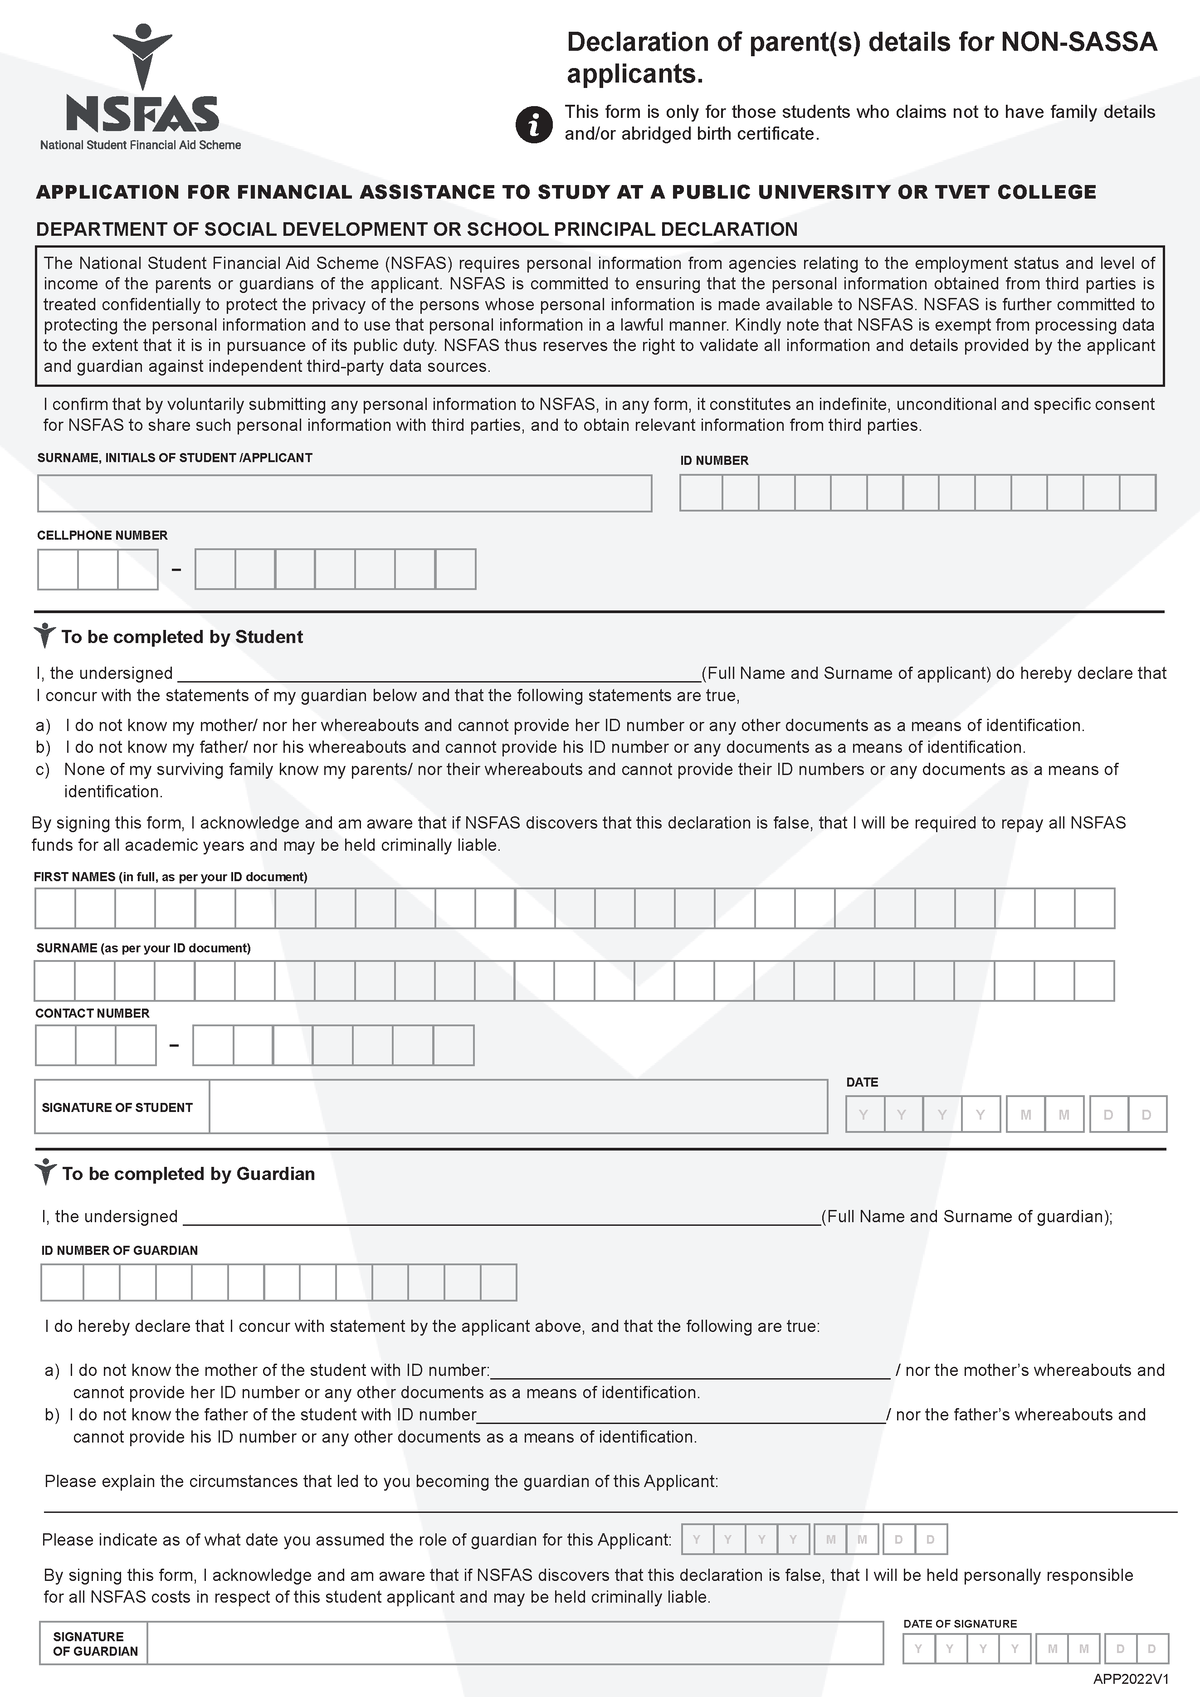 2022 Nsfas Declaration Form non Sassa applicants) Official document